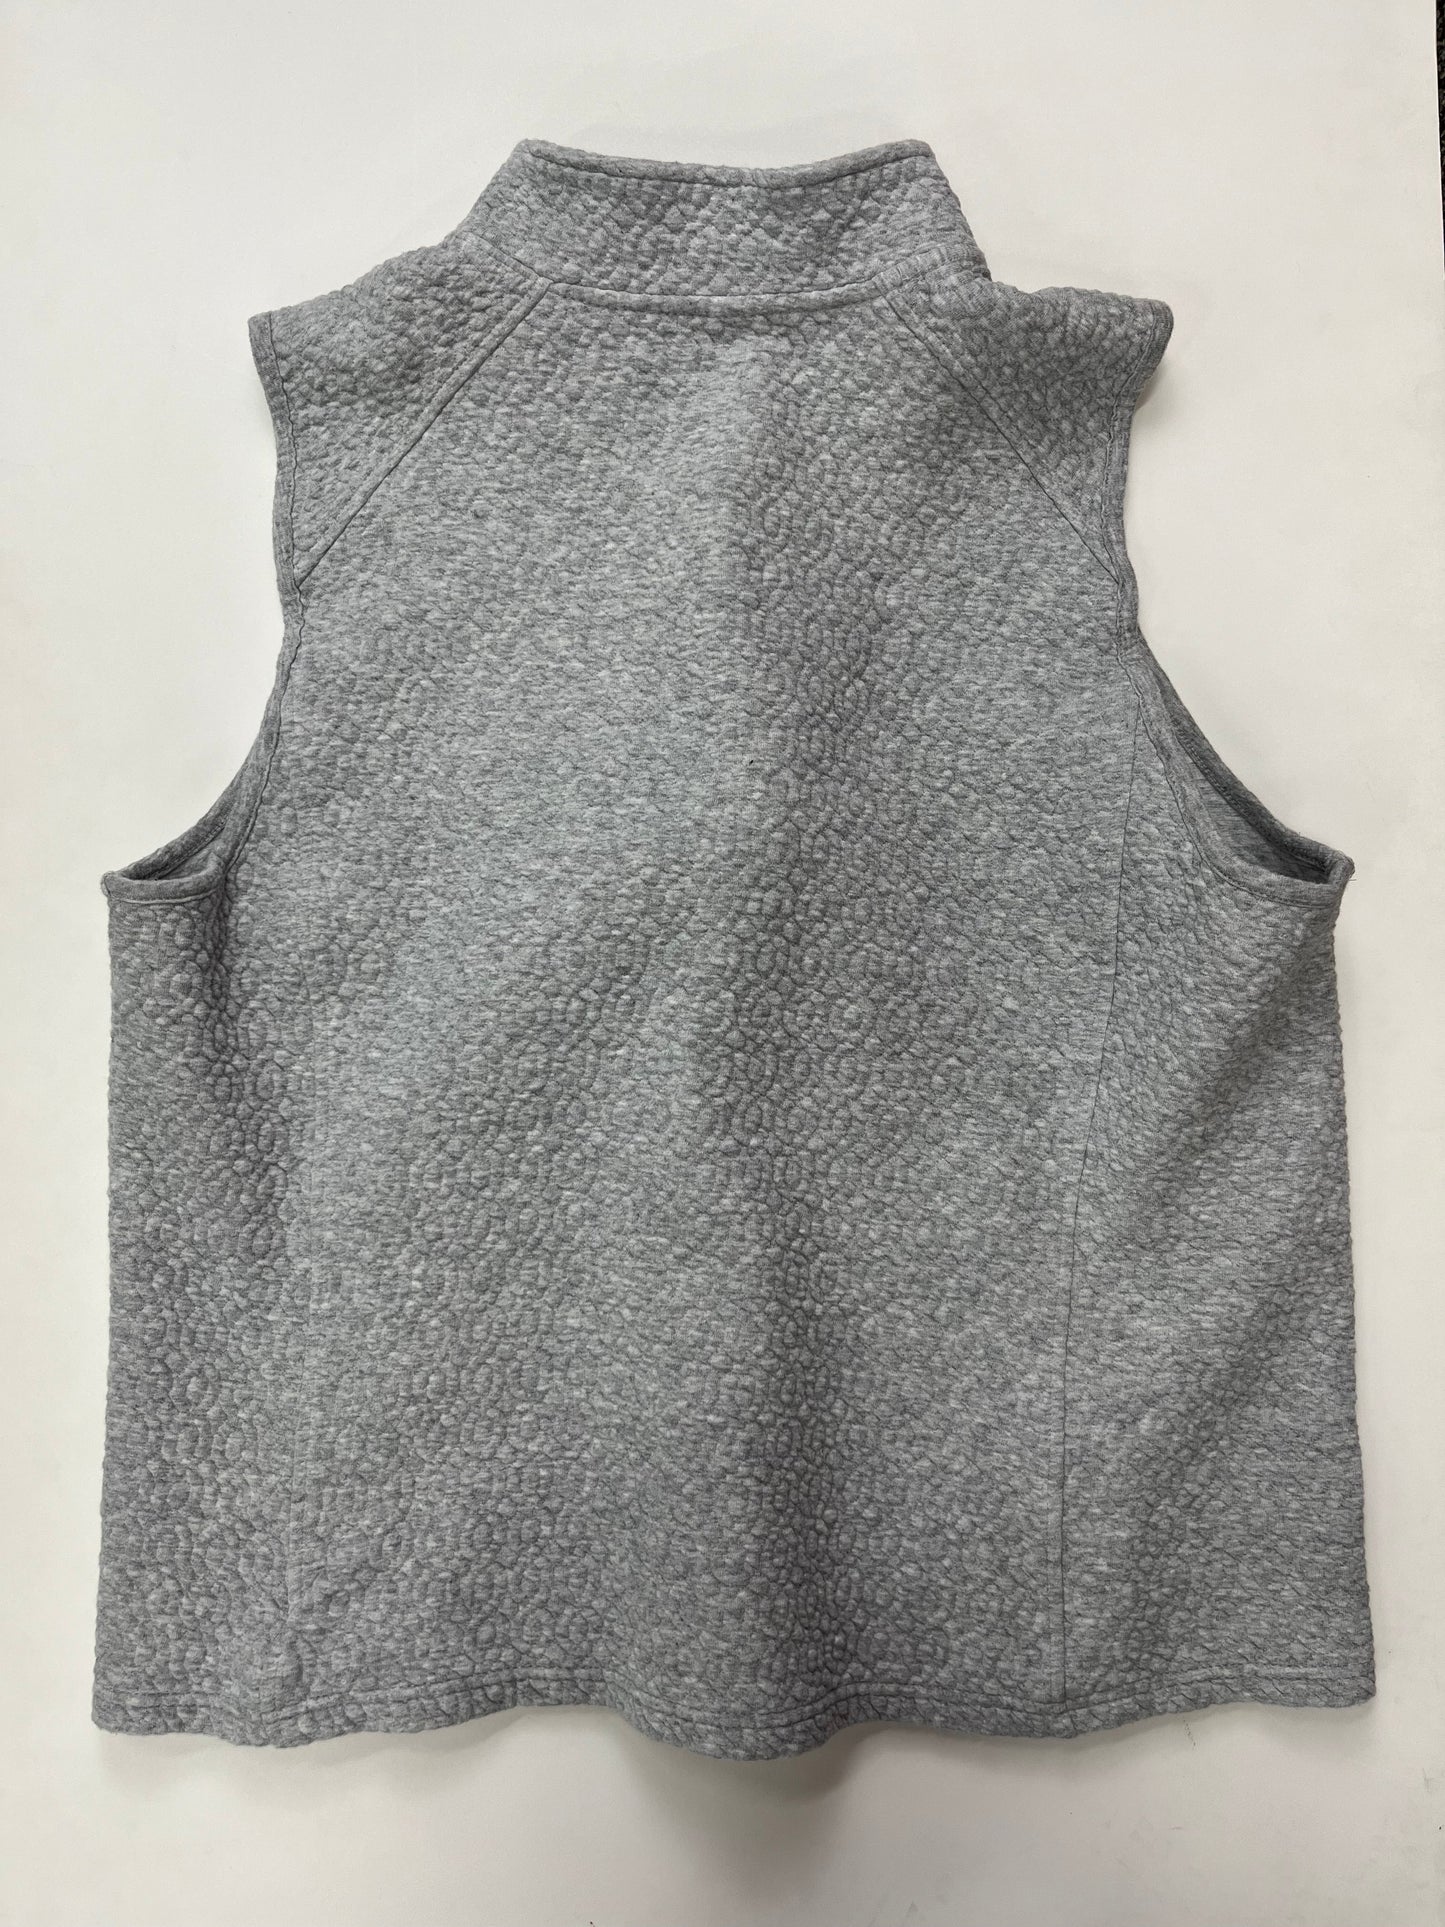 Vest Fleece By Croft And Barrow  Size: Xl